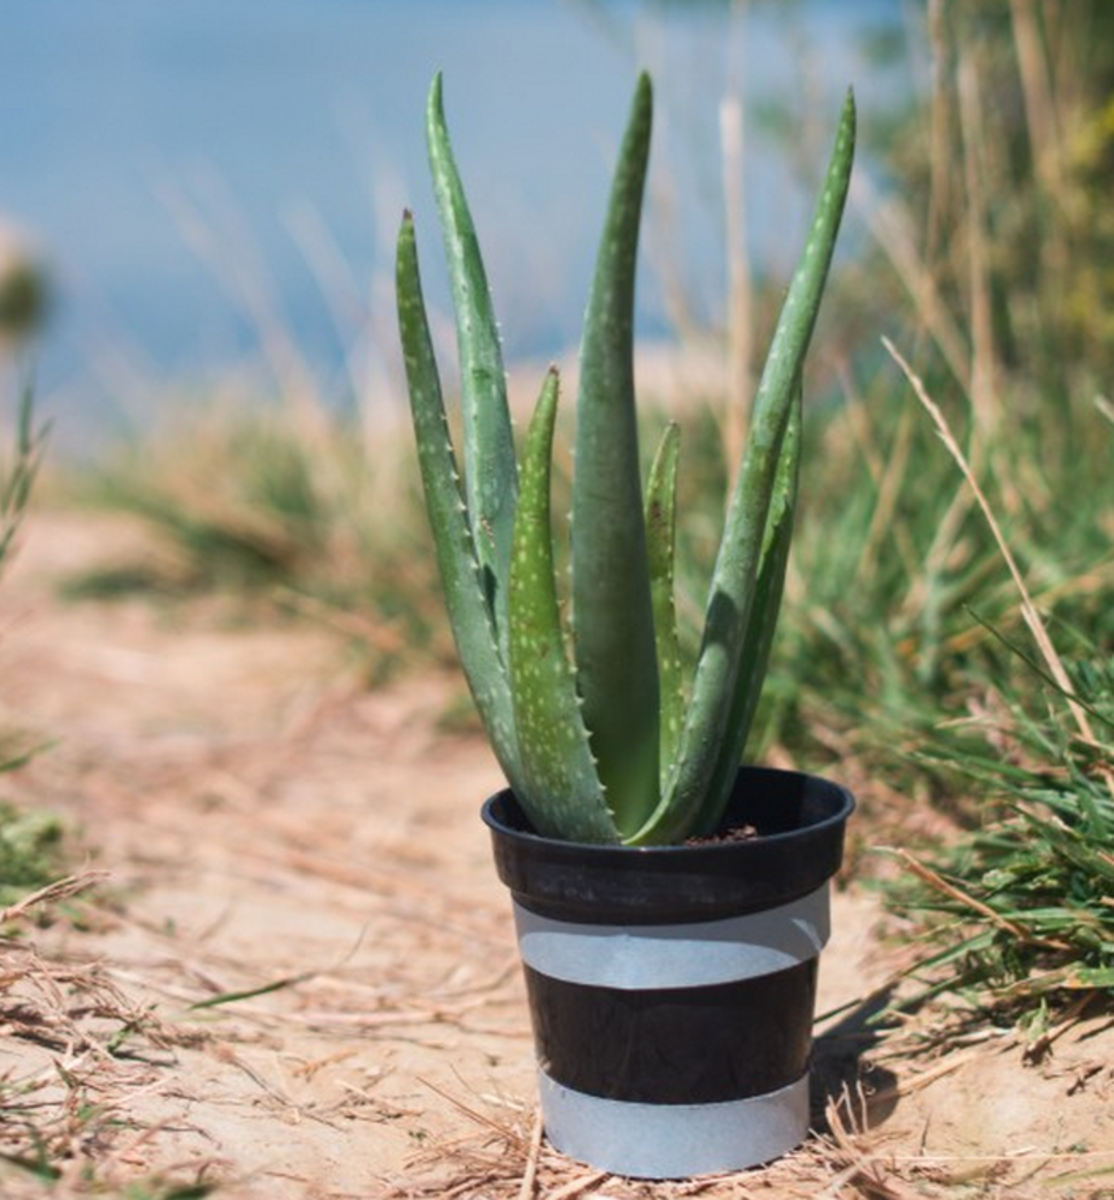 Aloe vera helps combat dark spots on skin. 